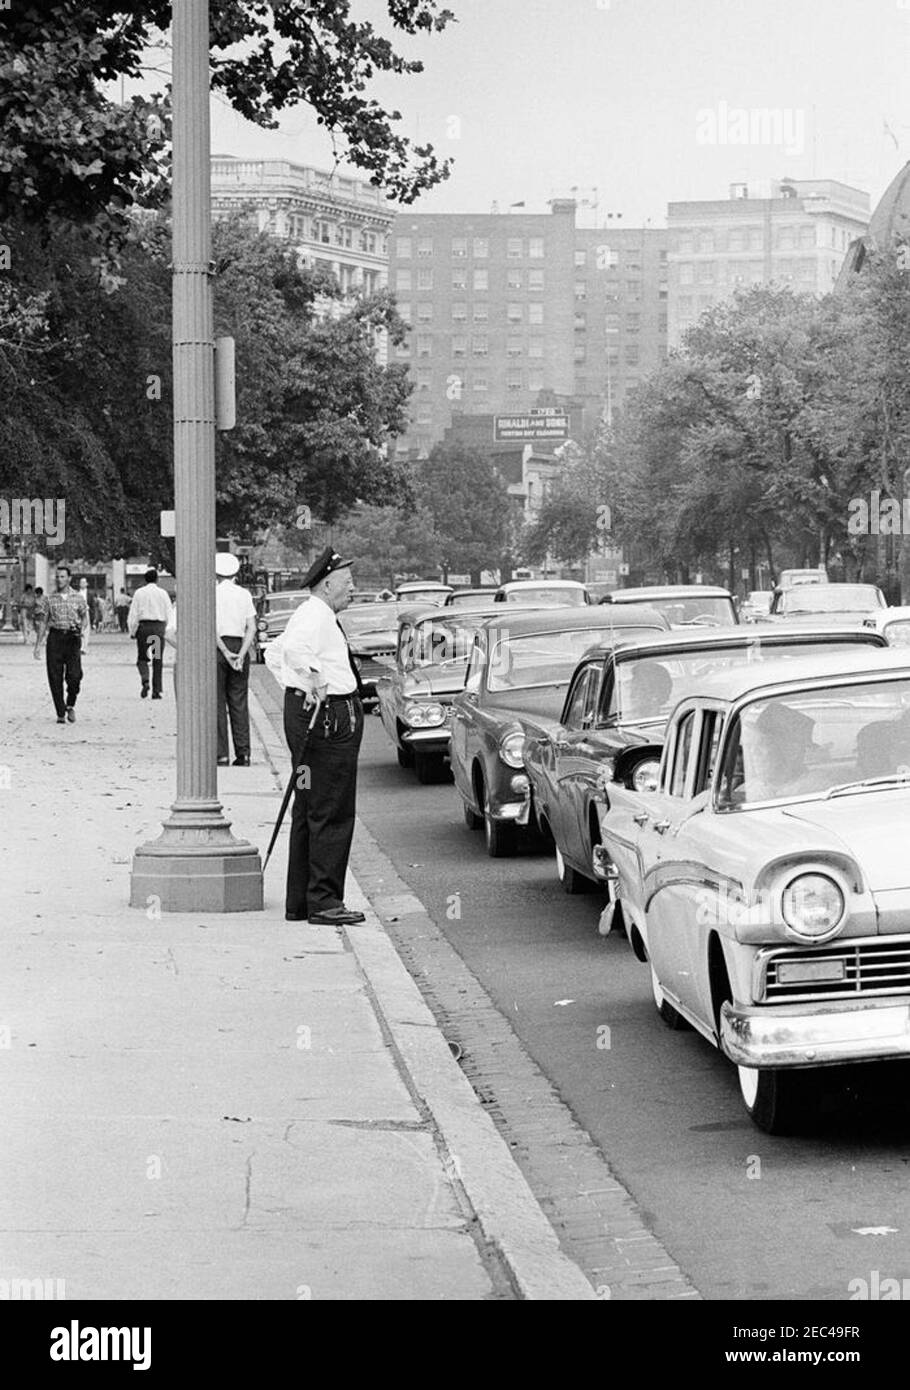 Pedestrians on Pennsylvania Avenue. View of pedestrians and cars on Pennsylvania Avenue in Washington, D.C. Stock Photo